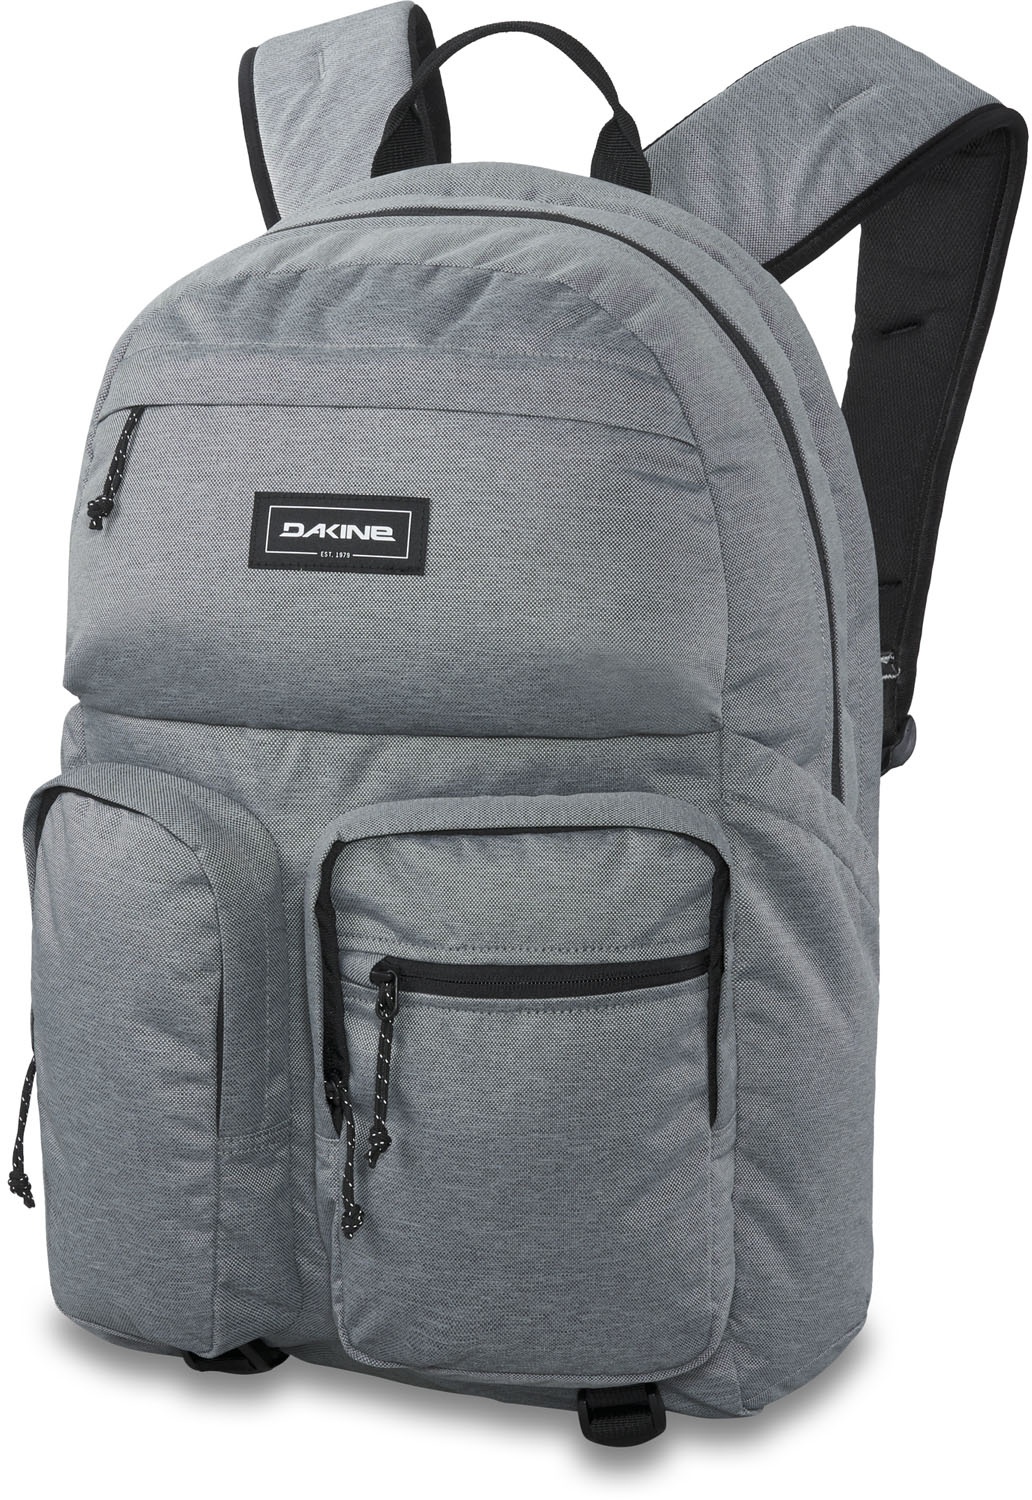 Dakine Method Backpack DLX 28L Geyser Grey